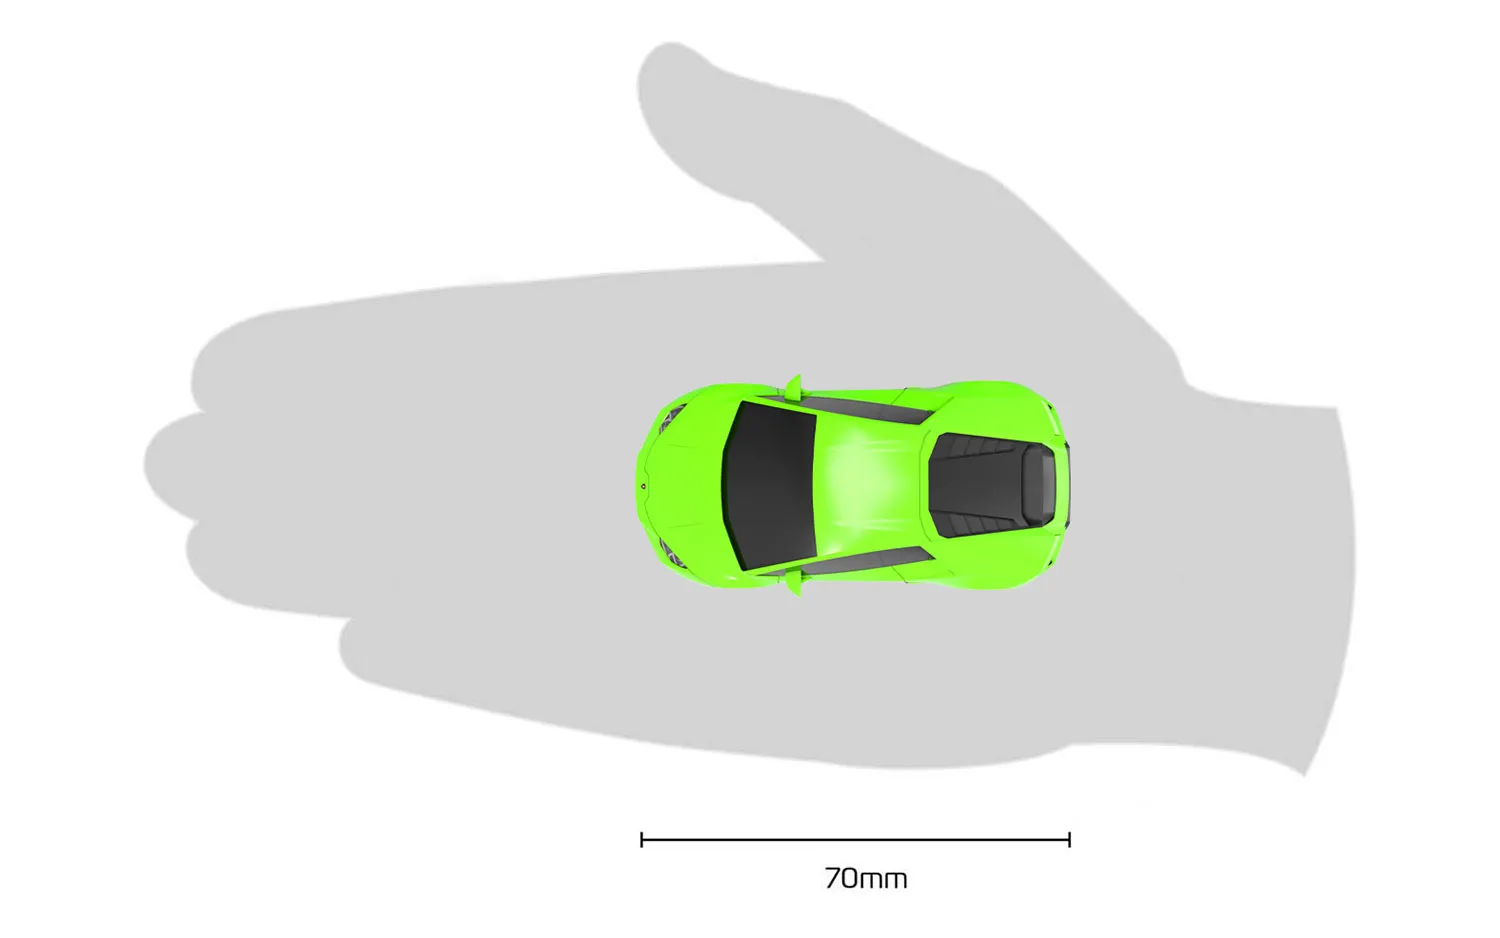 Micro Scalextric Super Speed Race Set - Lamborghini vs Porsche - Battery Powered Set